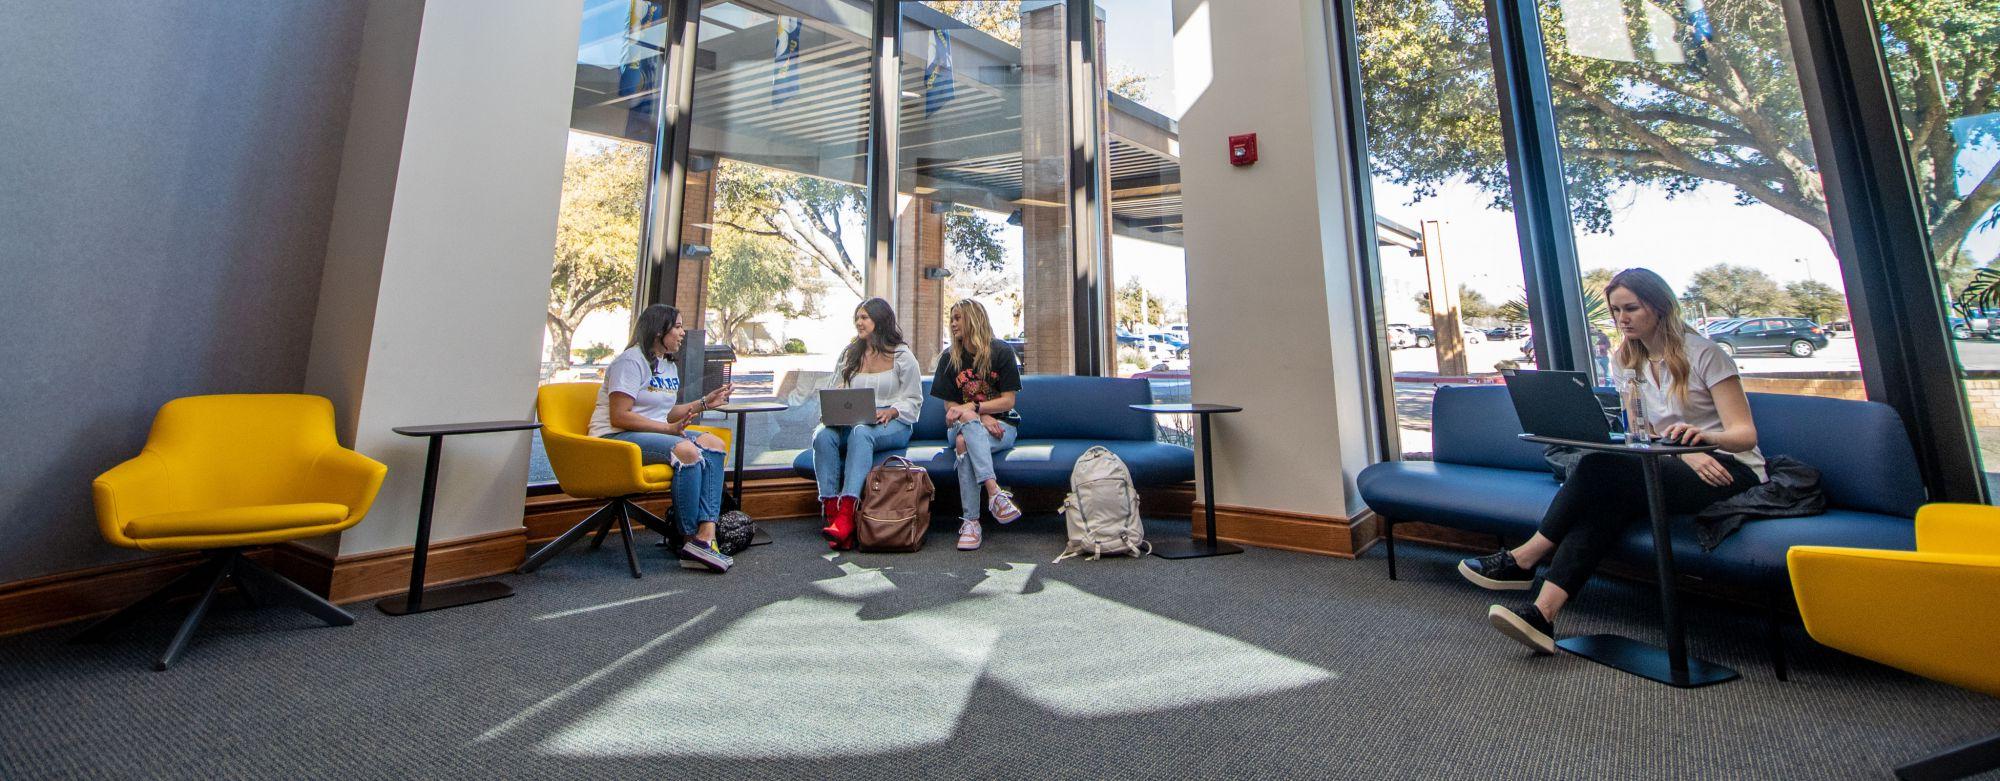 Students talking in the Houston Harte University Center